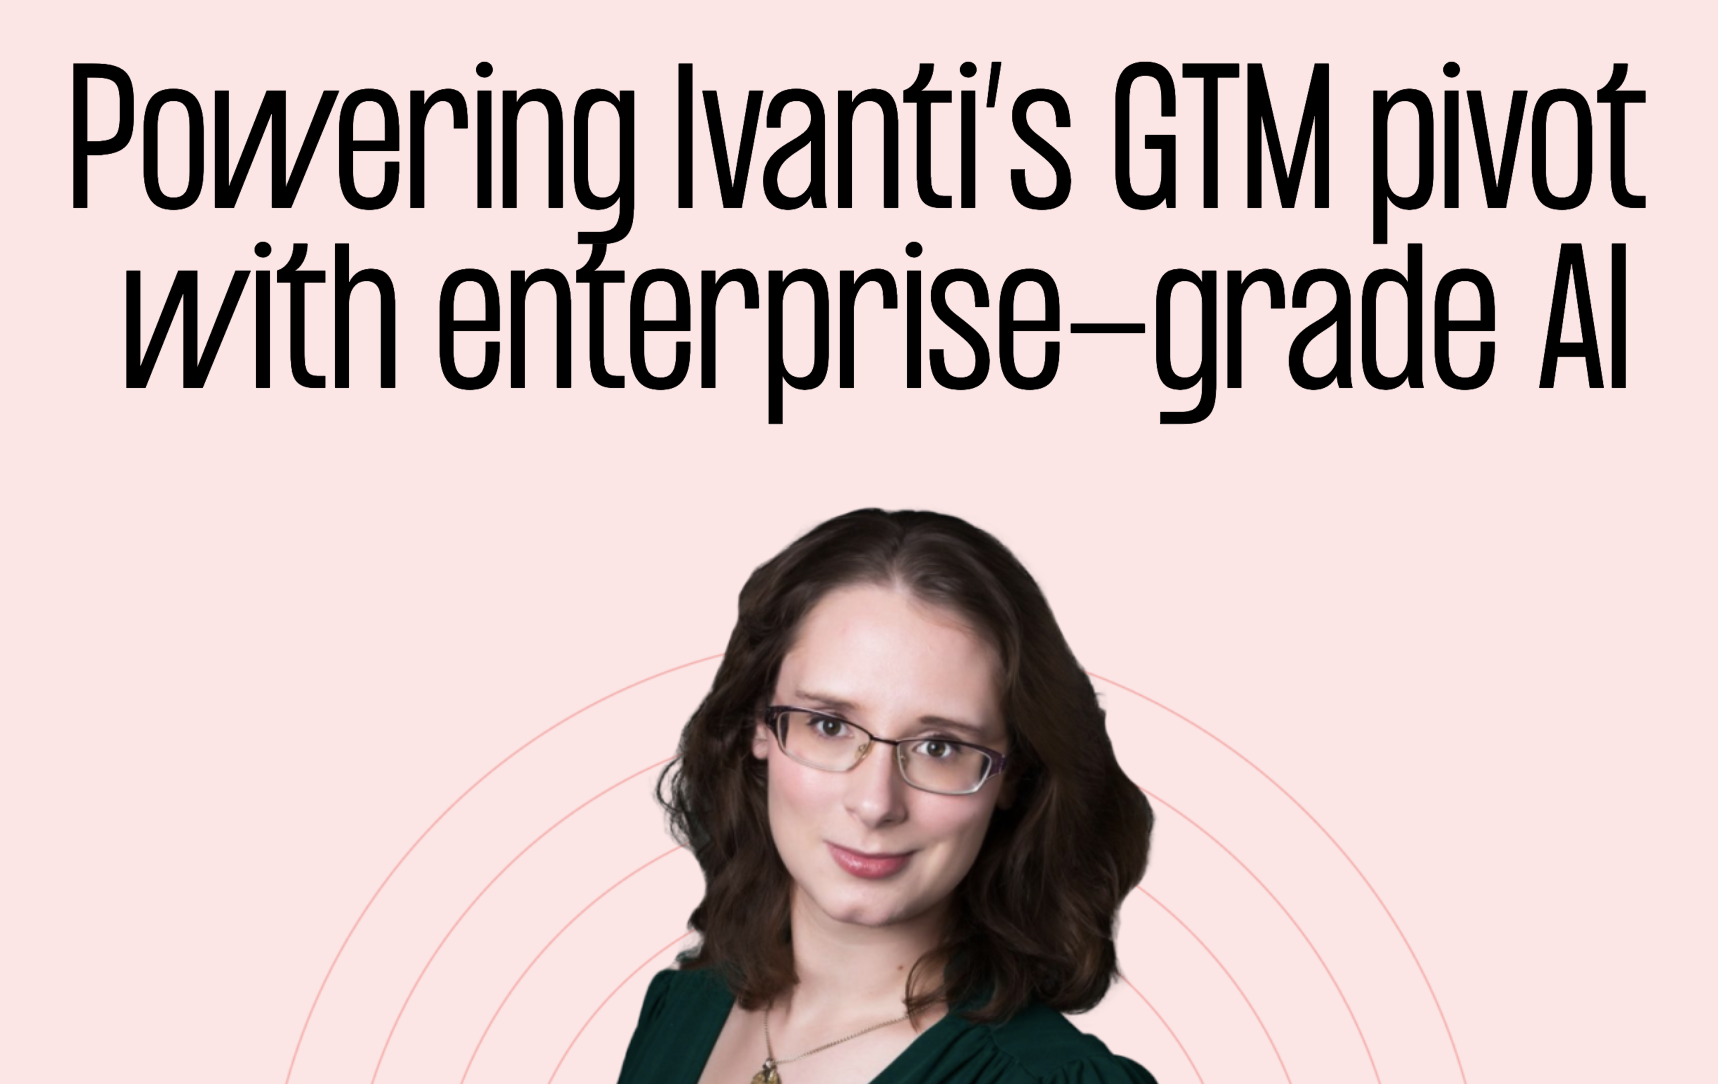 Powering Ivanti’s GTM pivot 
with enterprise-grade AI